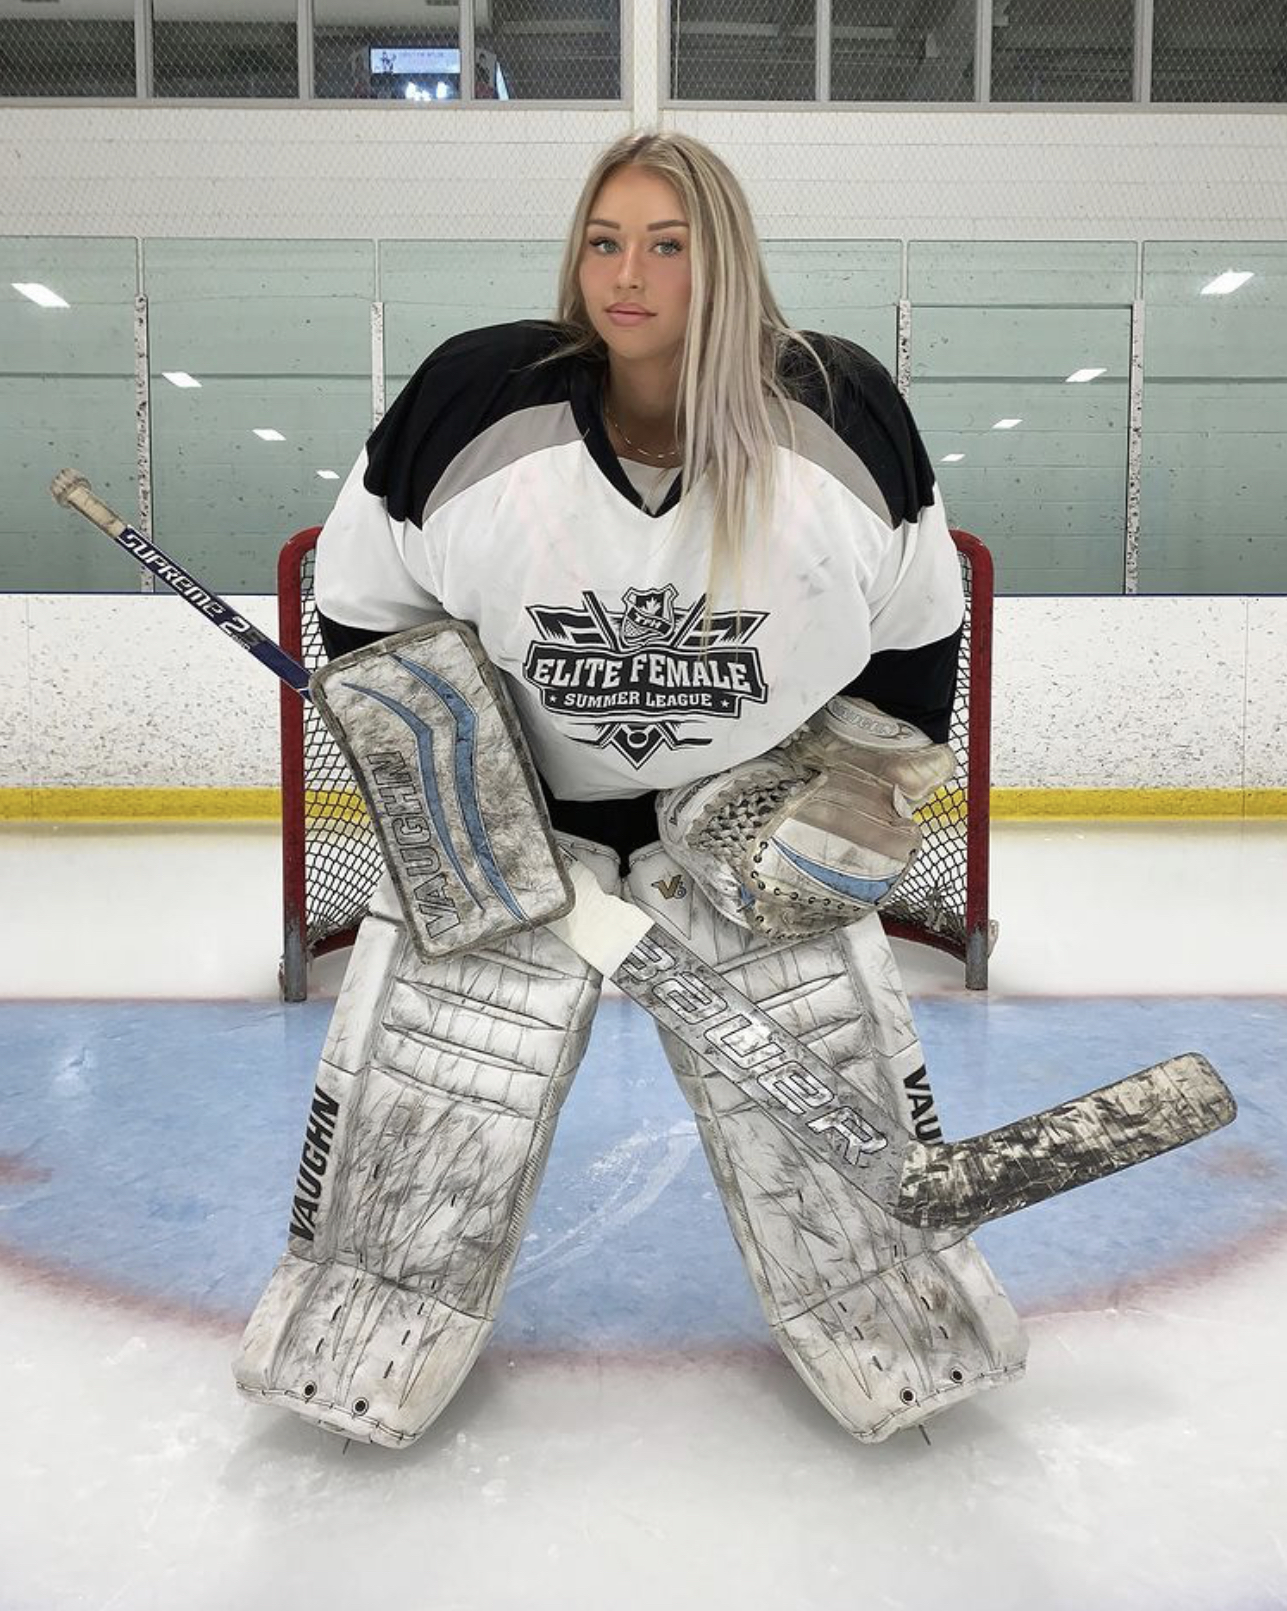 Hot female hockey goalie 💖 Sex in hockey: Slovan Babes - Абр